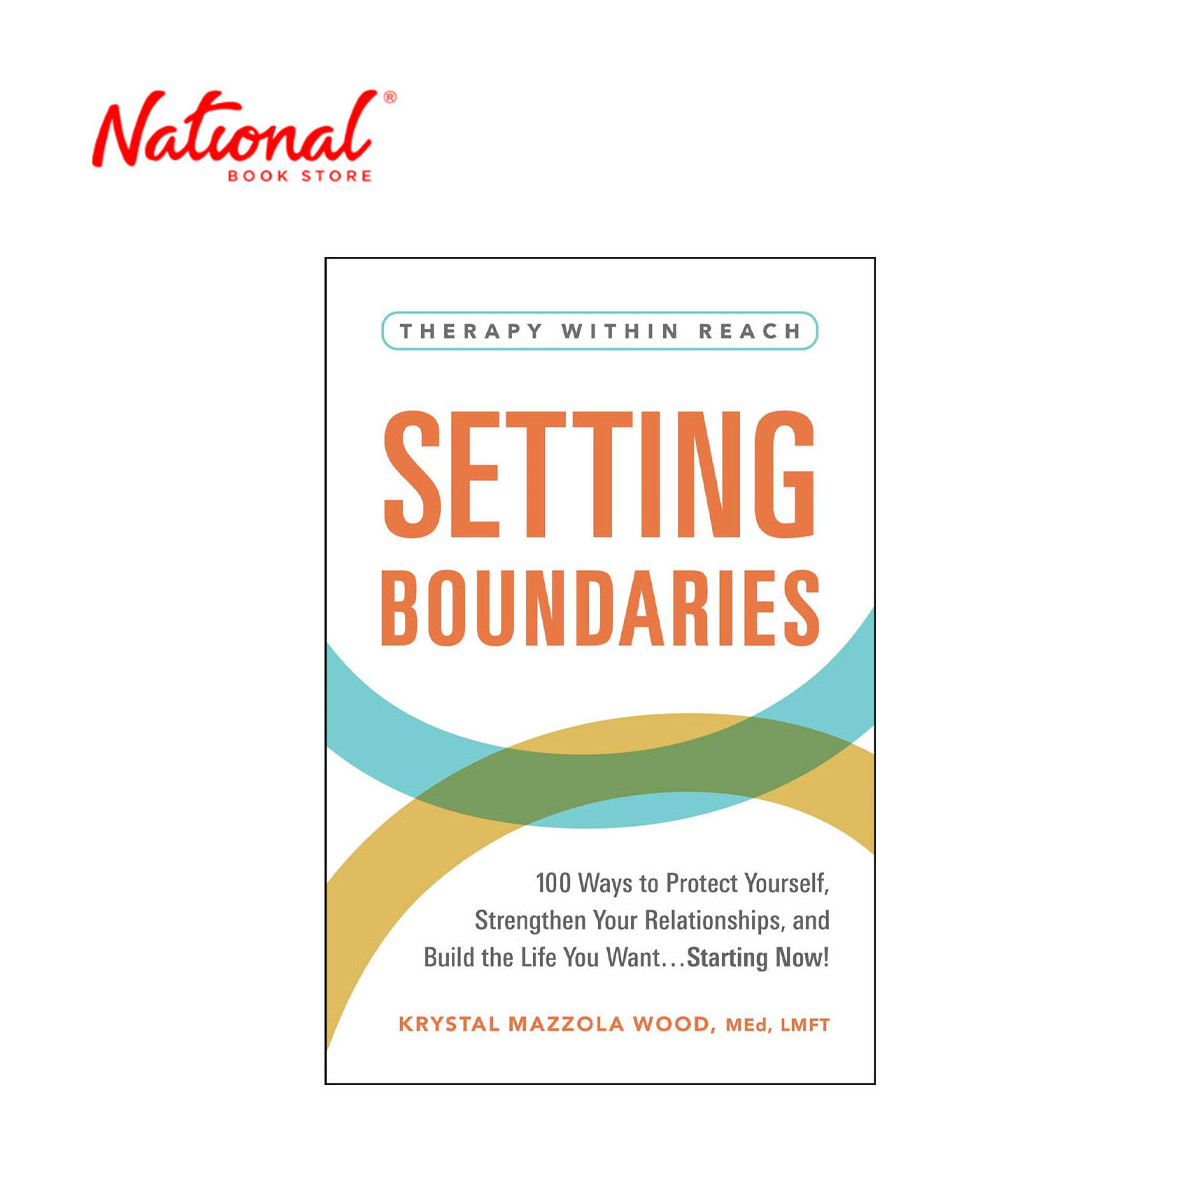 Setting Boundaries by Krystal Mazzola Wood - Trade Paperback - Psychology & Self-Help